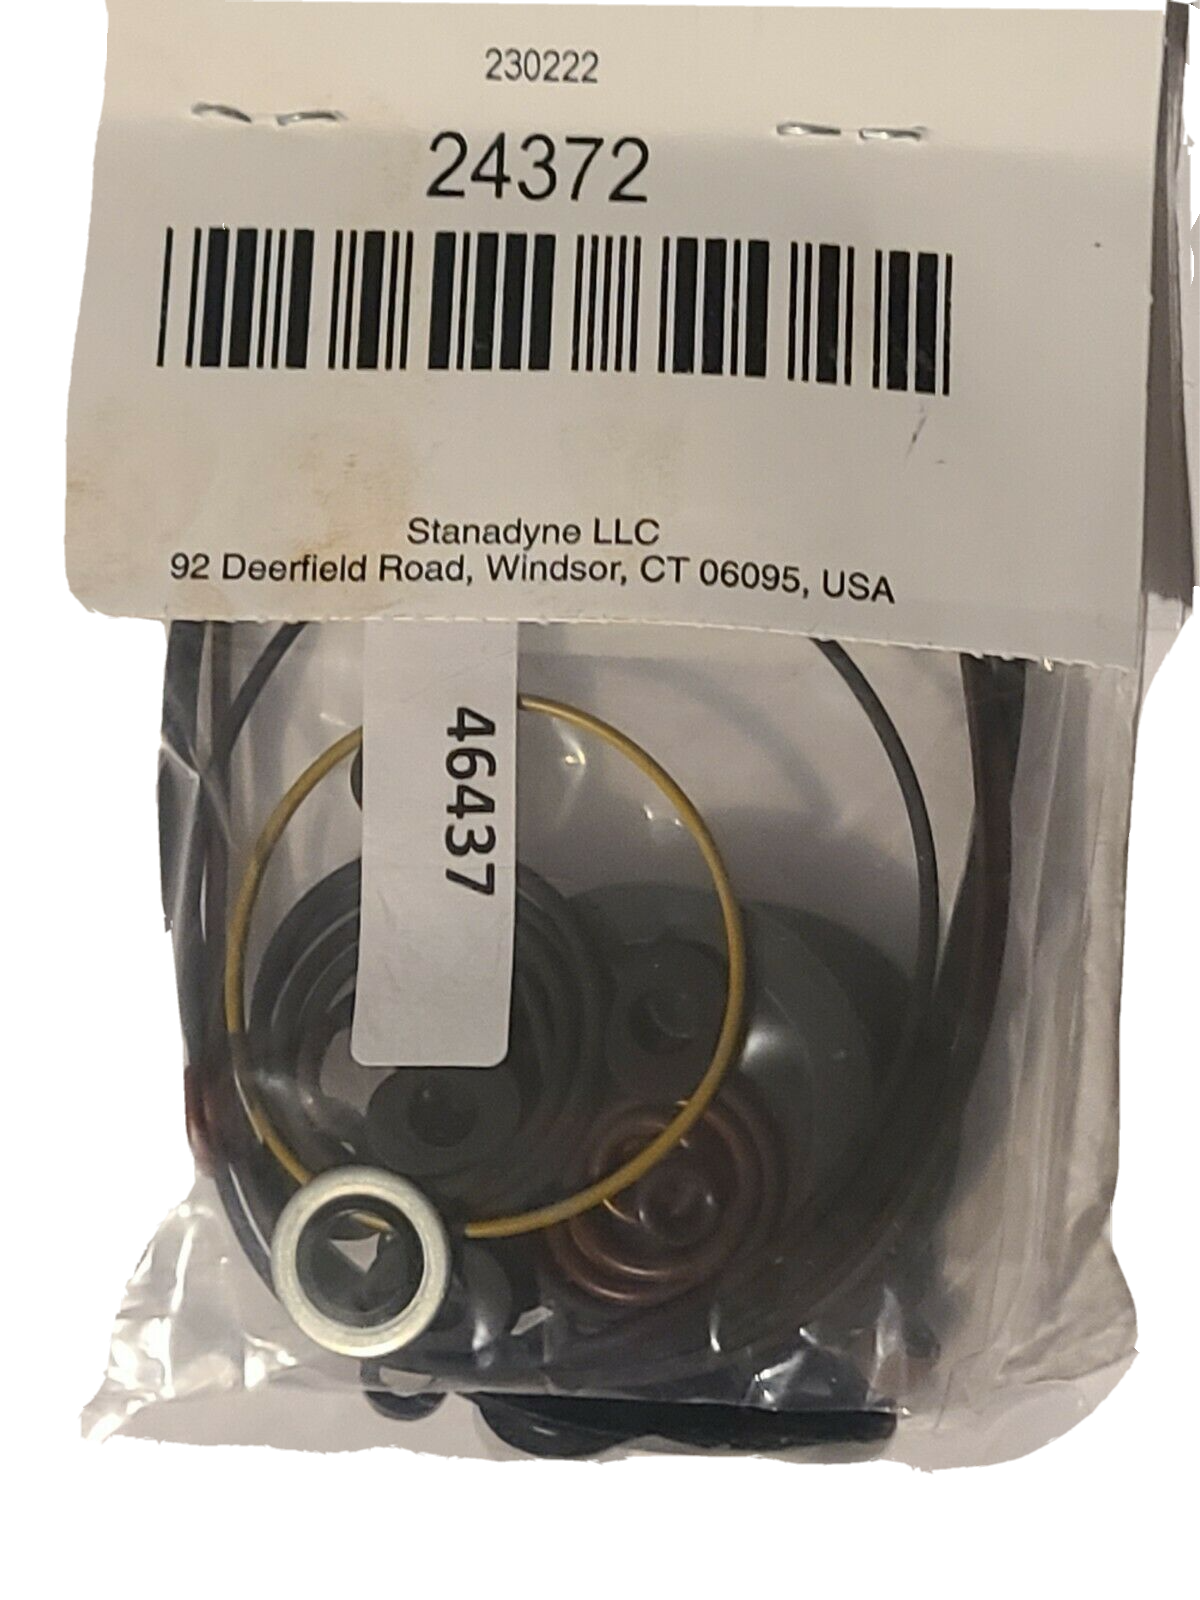 Stanadyne OEM Gasket Seal Kit 24372= to 20019, 2055 for DM model injection pump.